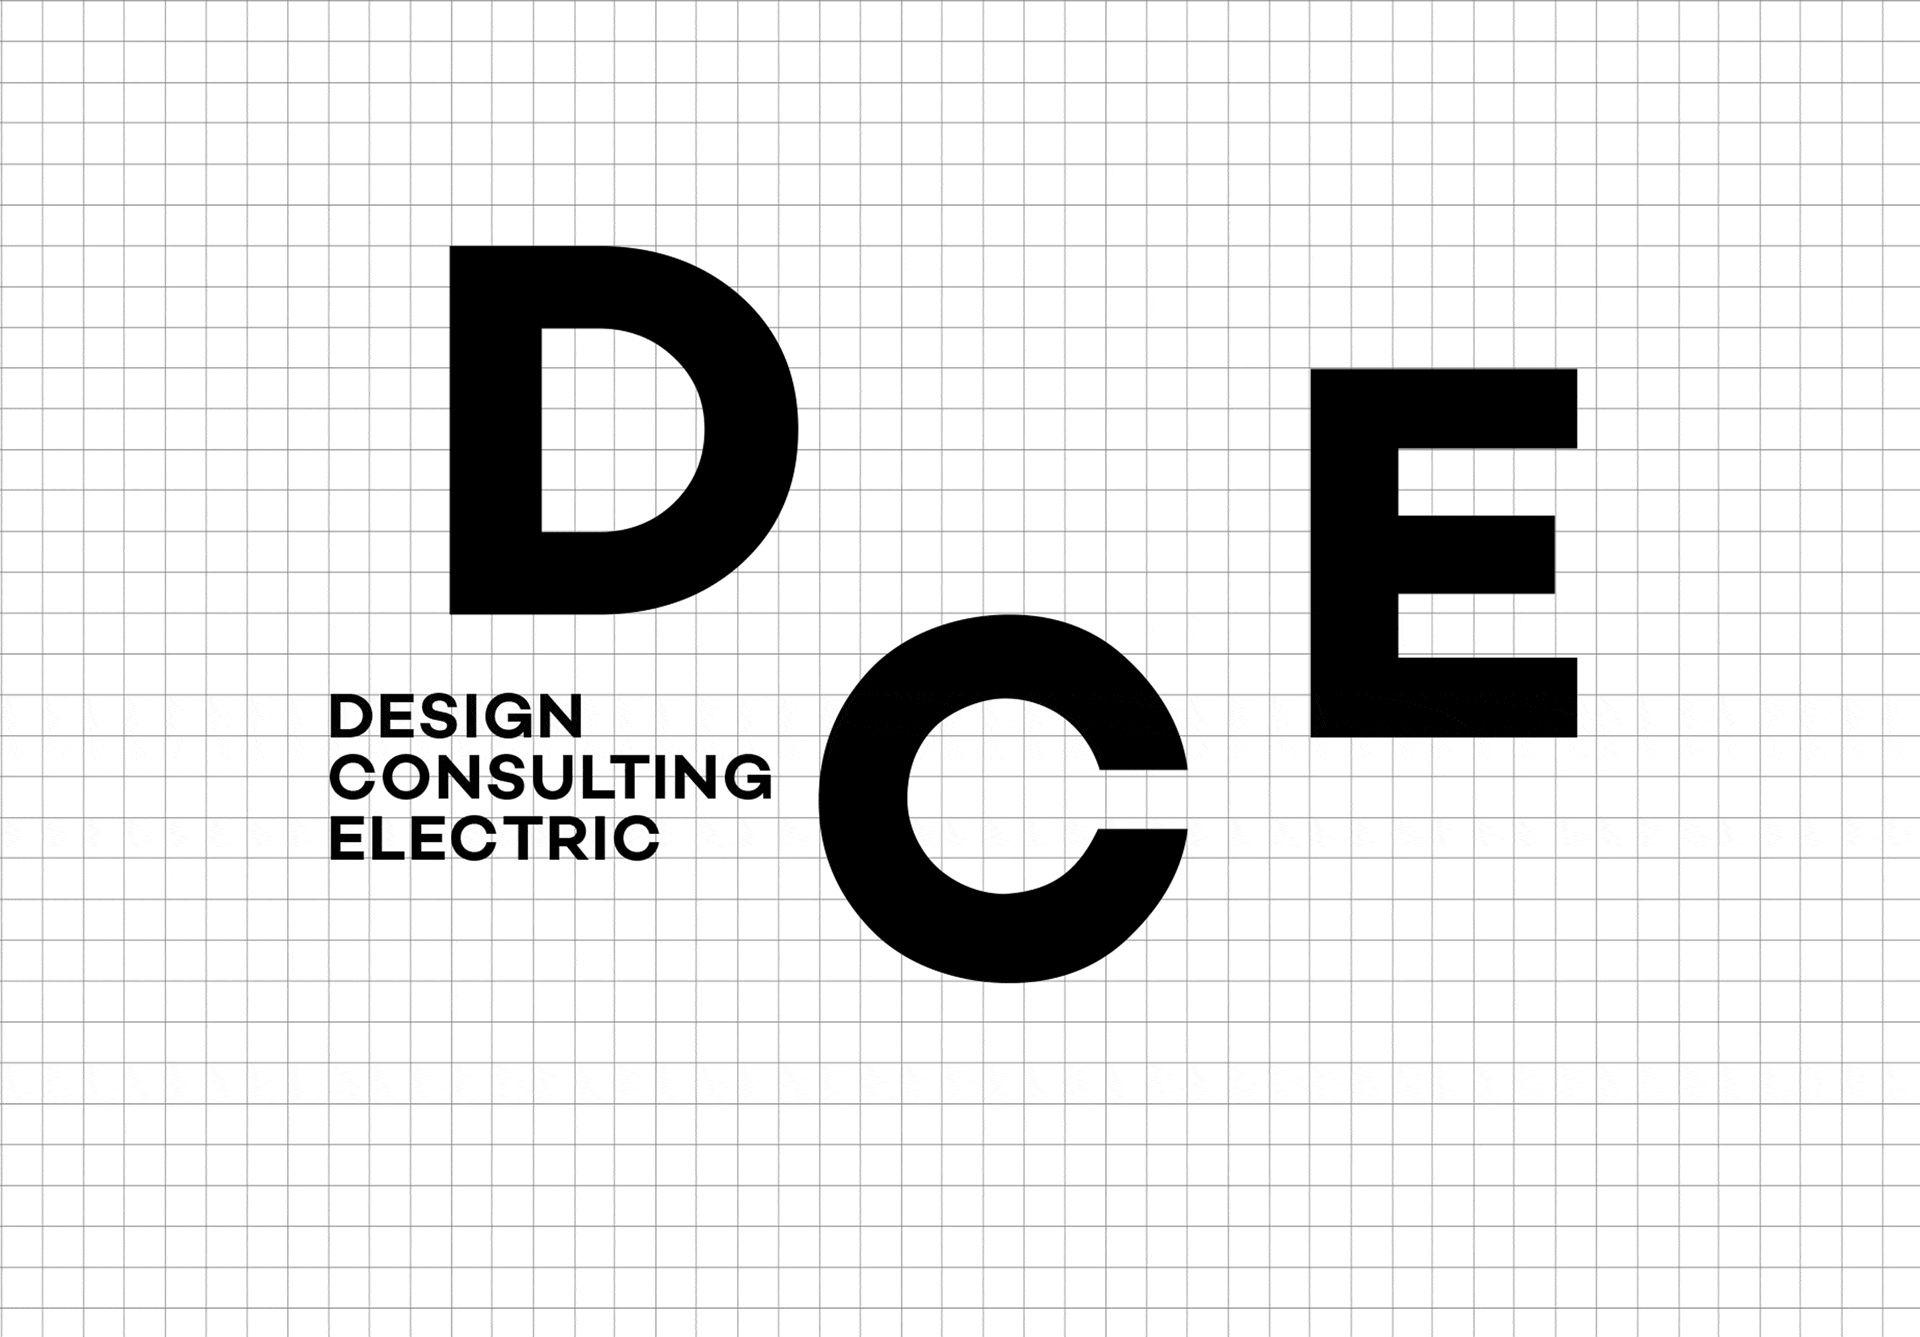 Design Consulting Electric - 1/1